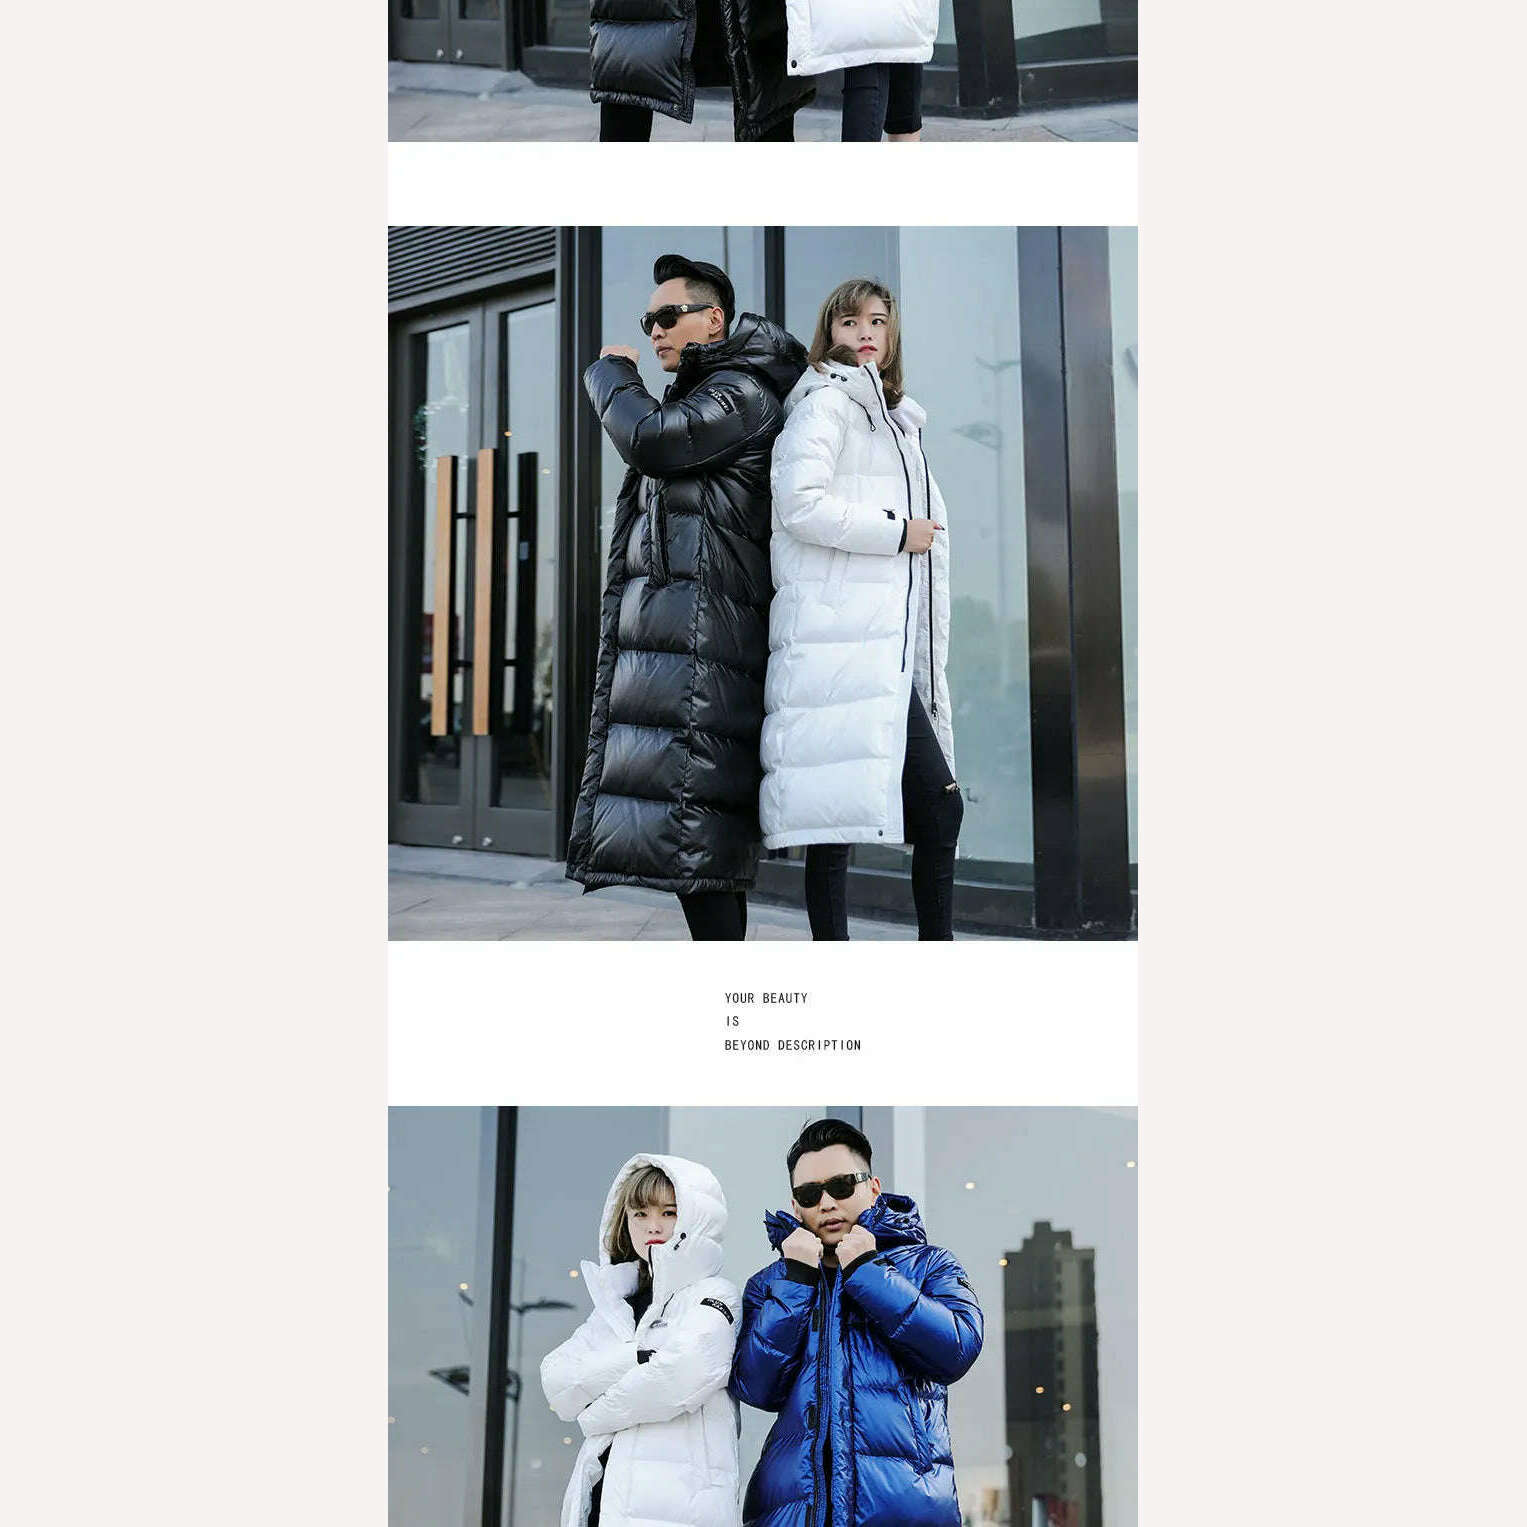 KIMLUD, Tcyeek Women's Down Jacket Hooded Thick Winter Coat Men Clothes 2020 Korean Warm Long Goose Down Jackets Fashion Outwear K-8893, KIMLUD Women's Clothes